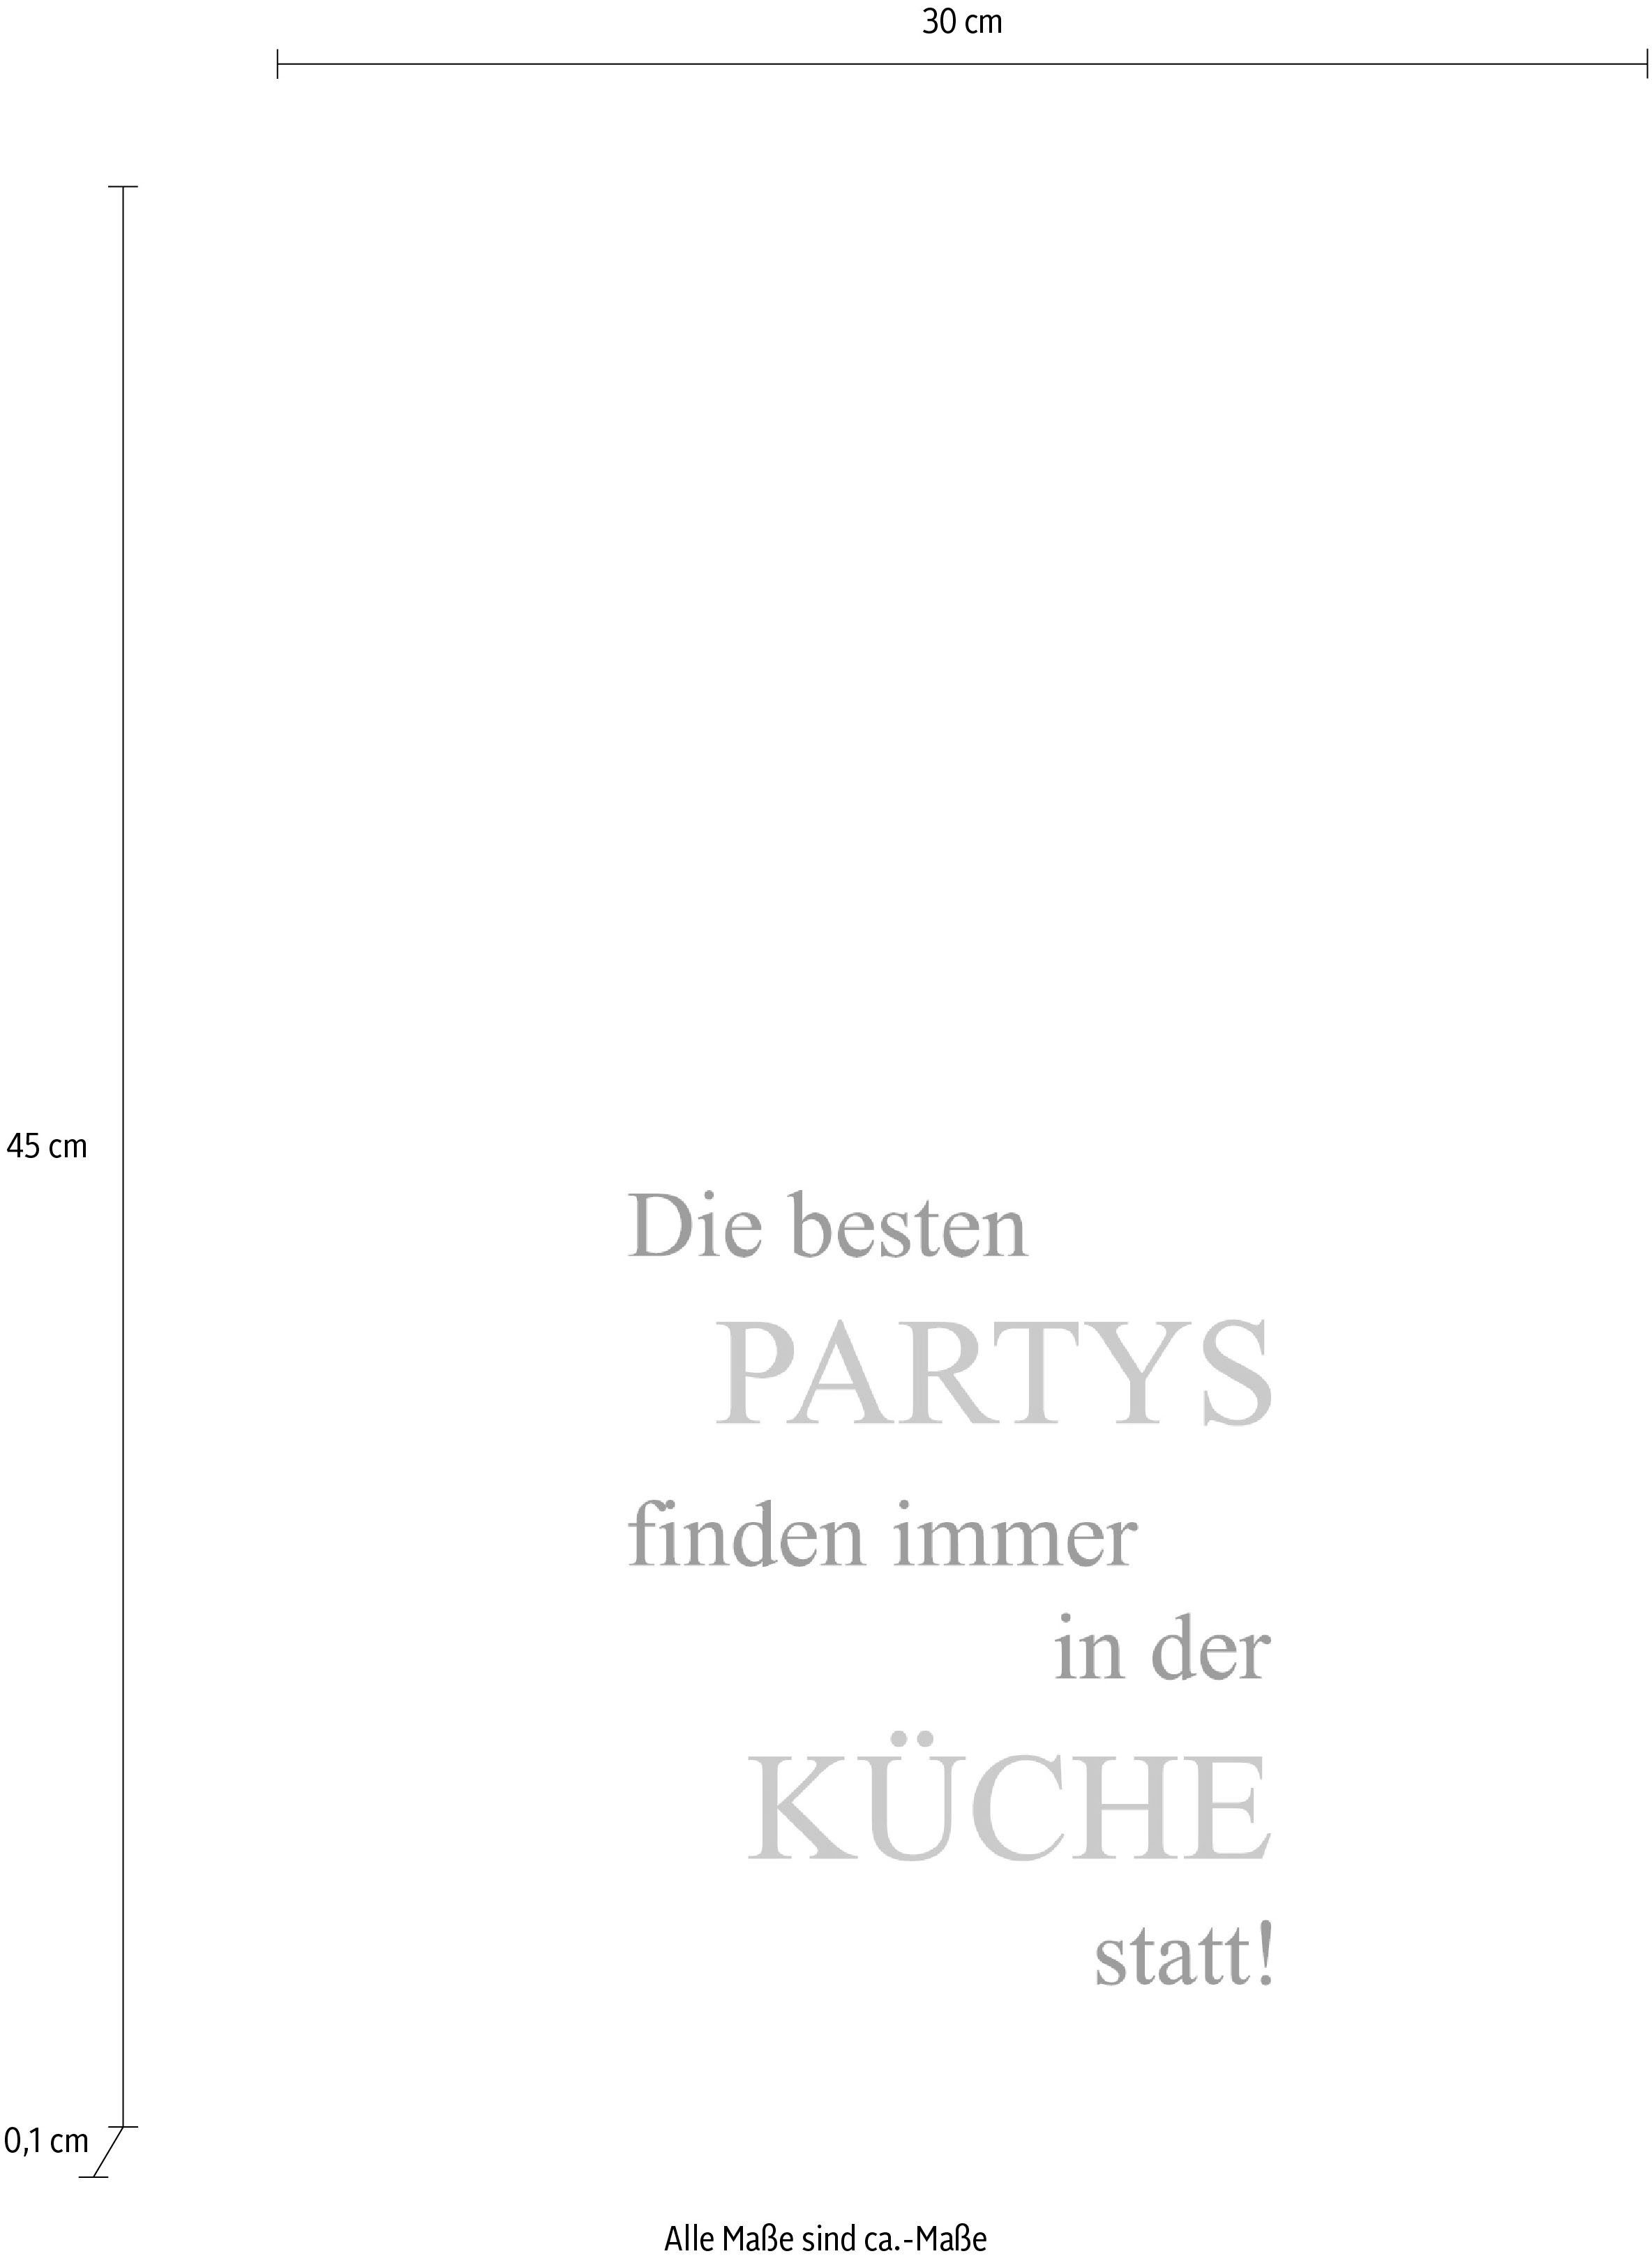 queence und Küche, Stahlblech Wanddekoobjekt Schriftzug Partys auf